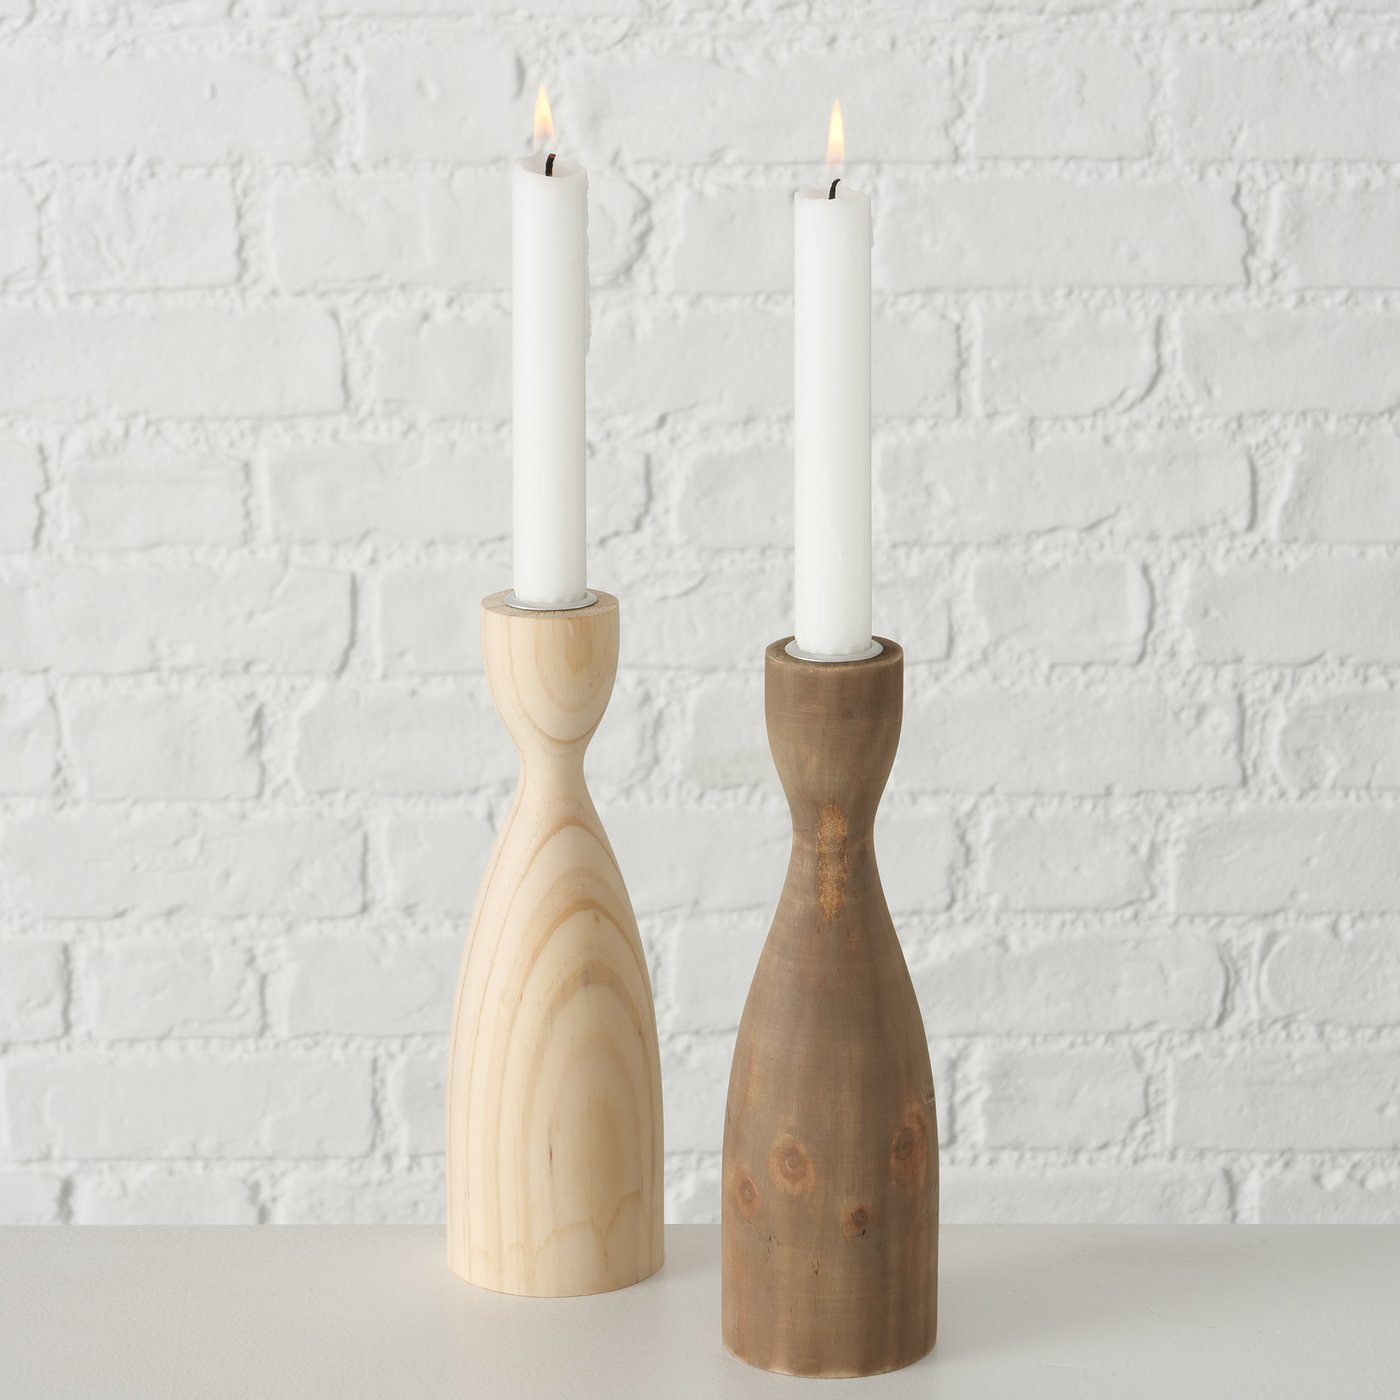 22cm Kerzenhalter | Markt Arm ALLARO Event - Textil | 1 Kiefernholz, 2er-Set Kerzenständer Kerzenhalter aus |